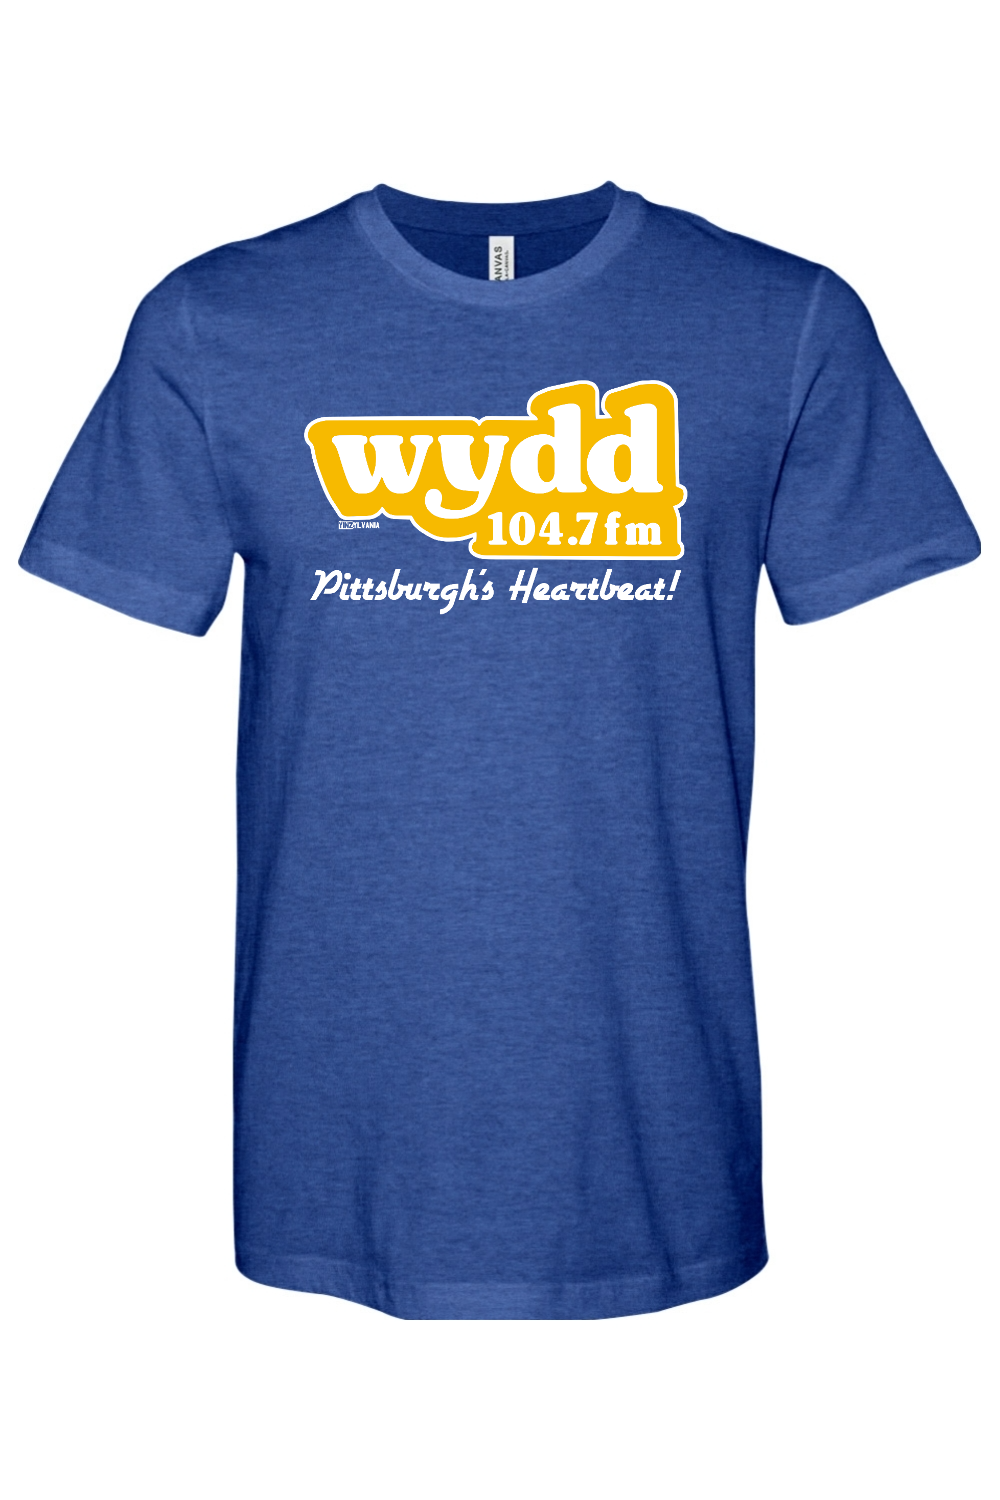 WYDD - Pittsburgh's Heartbeat - Yinzylvania